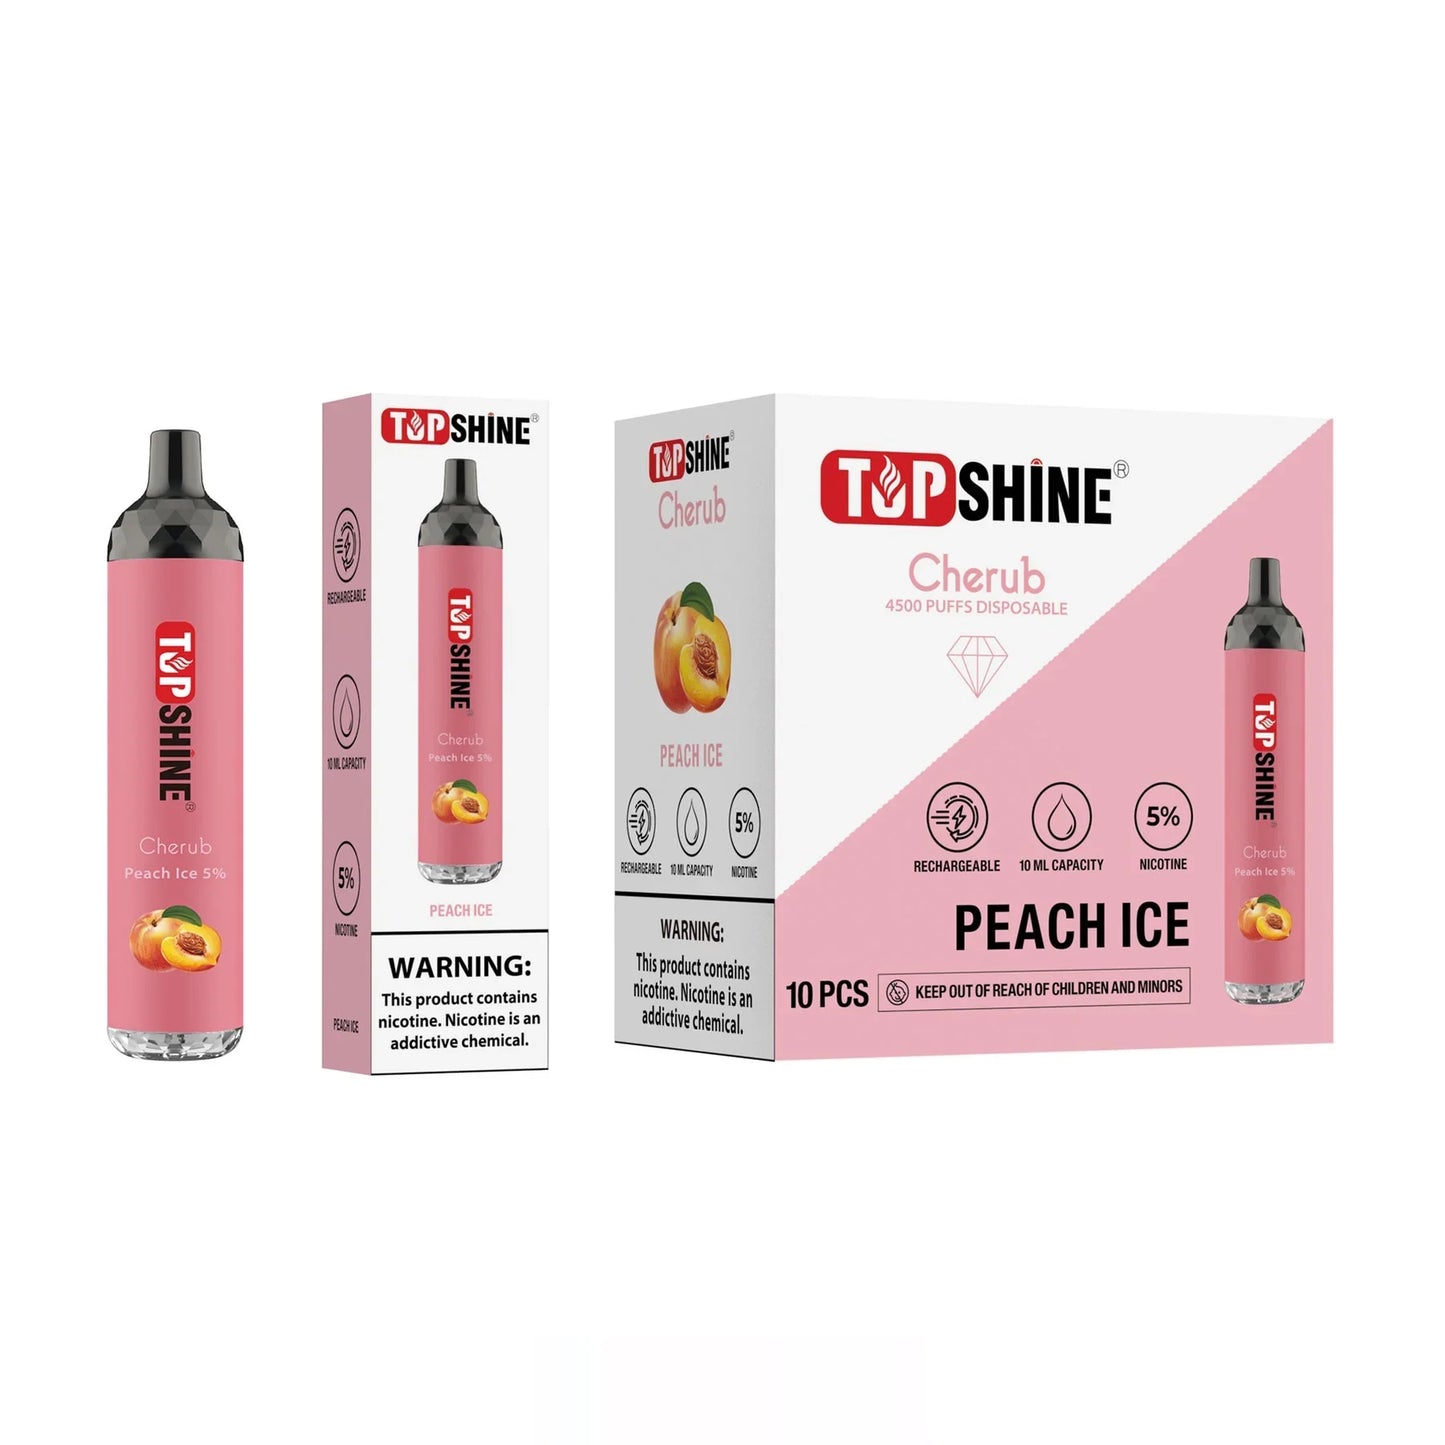 Peach Ice Top Shine Cherub Disposable Vape 4500 Puffs Best Sales Price - Disposables